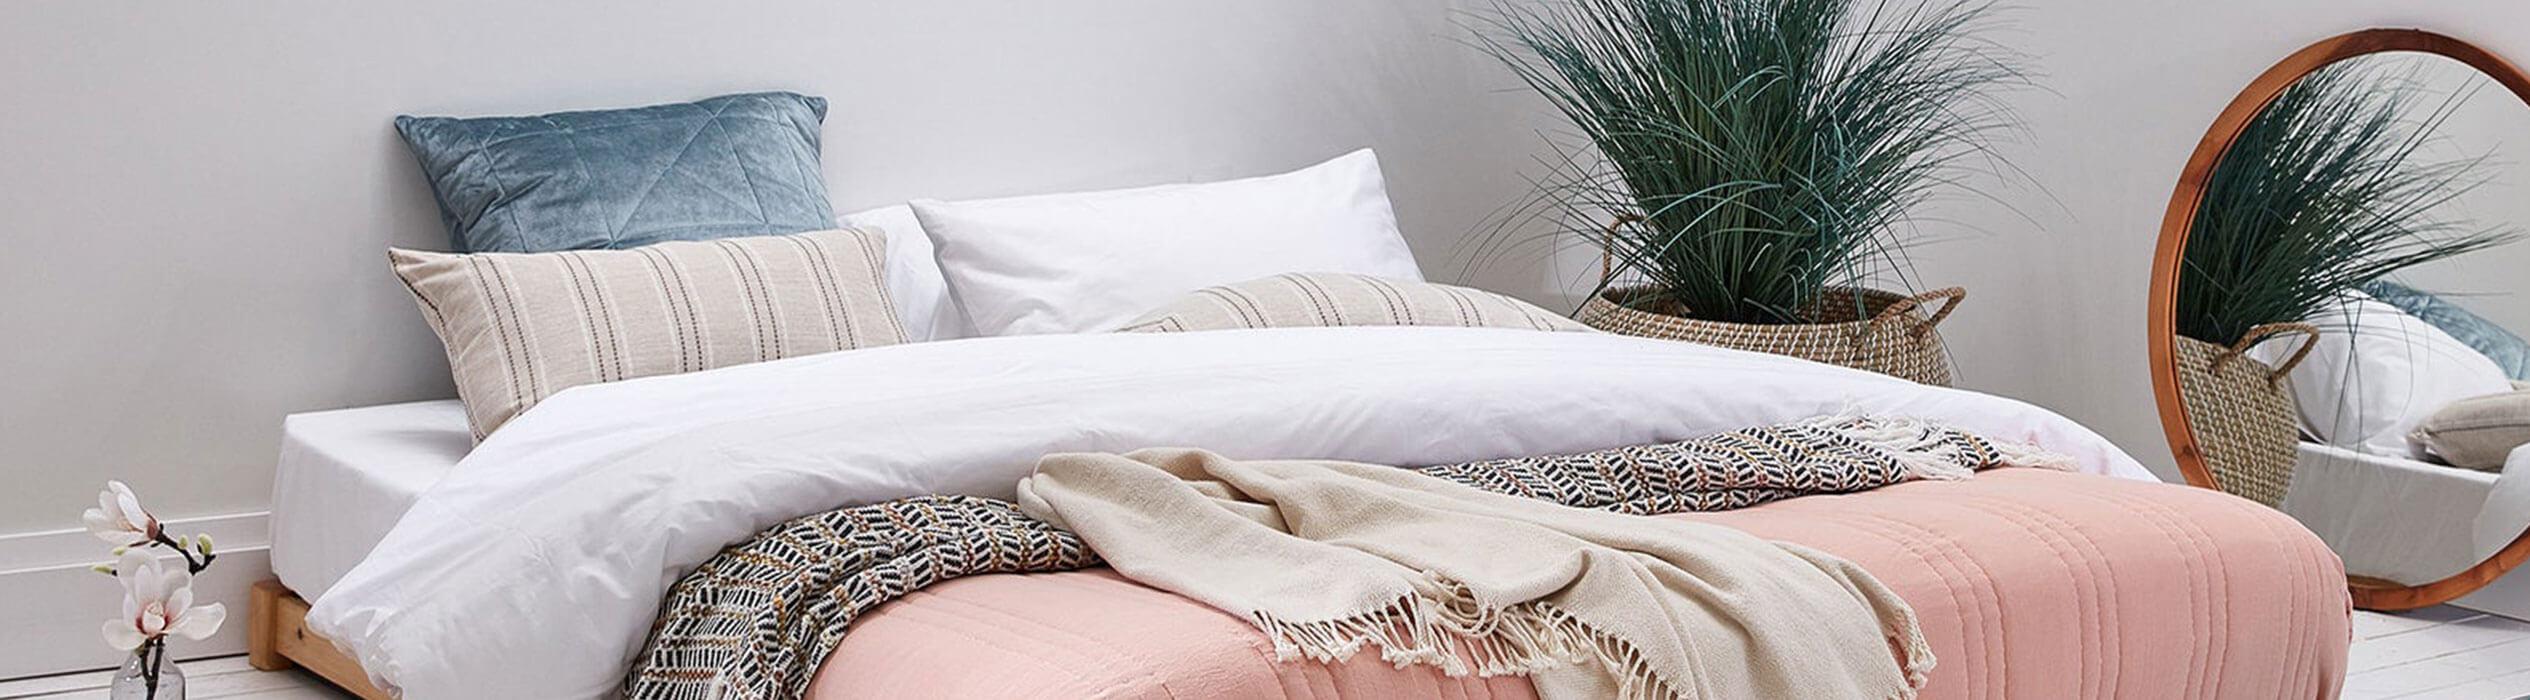 10 stylish loft bedroom ideas | Furniture & Choice